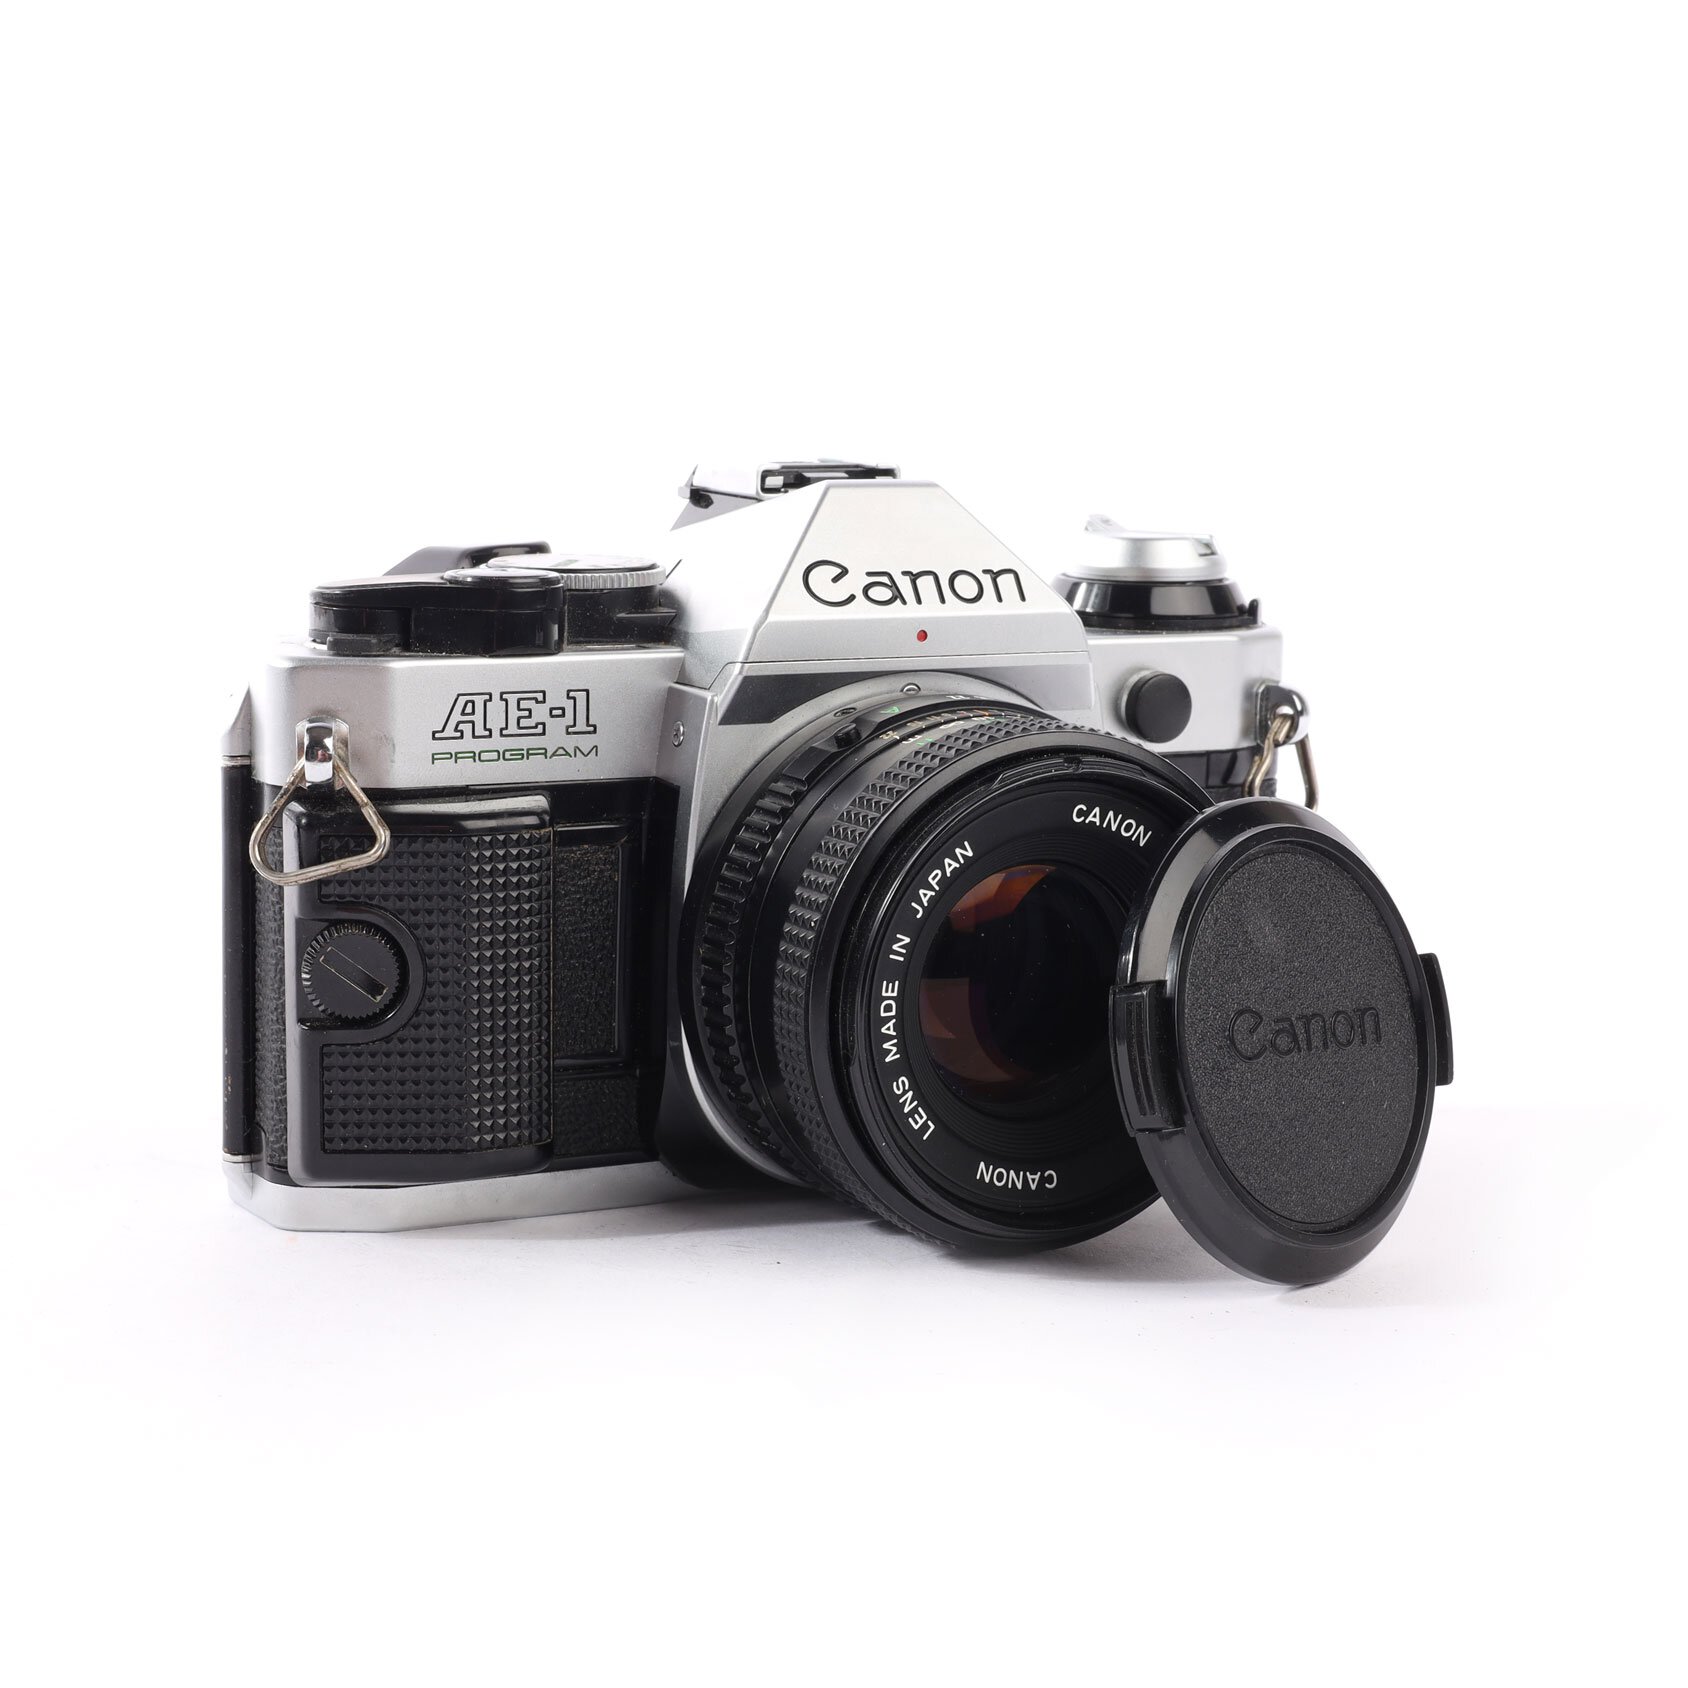 Canon AE1 Program FD 1.8/50mm